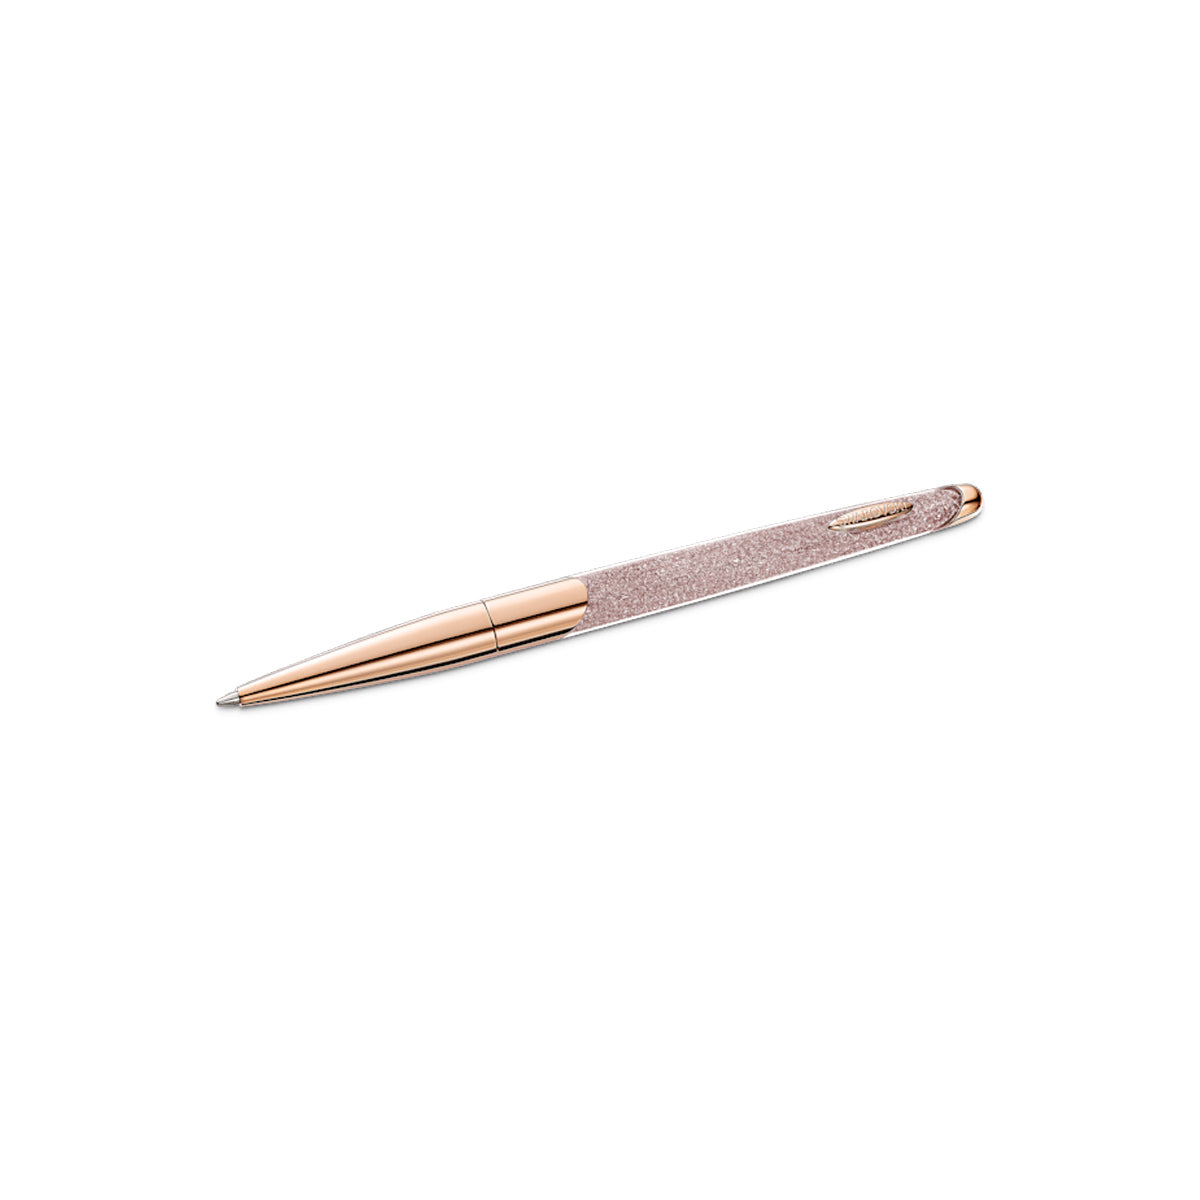 Swarovski Crystalline Nova Ballpoint Pen